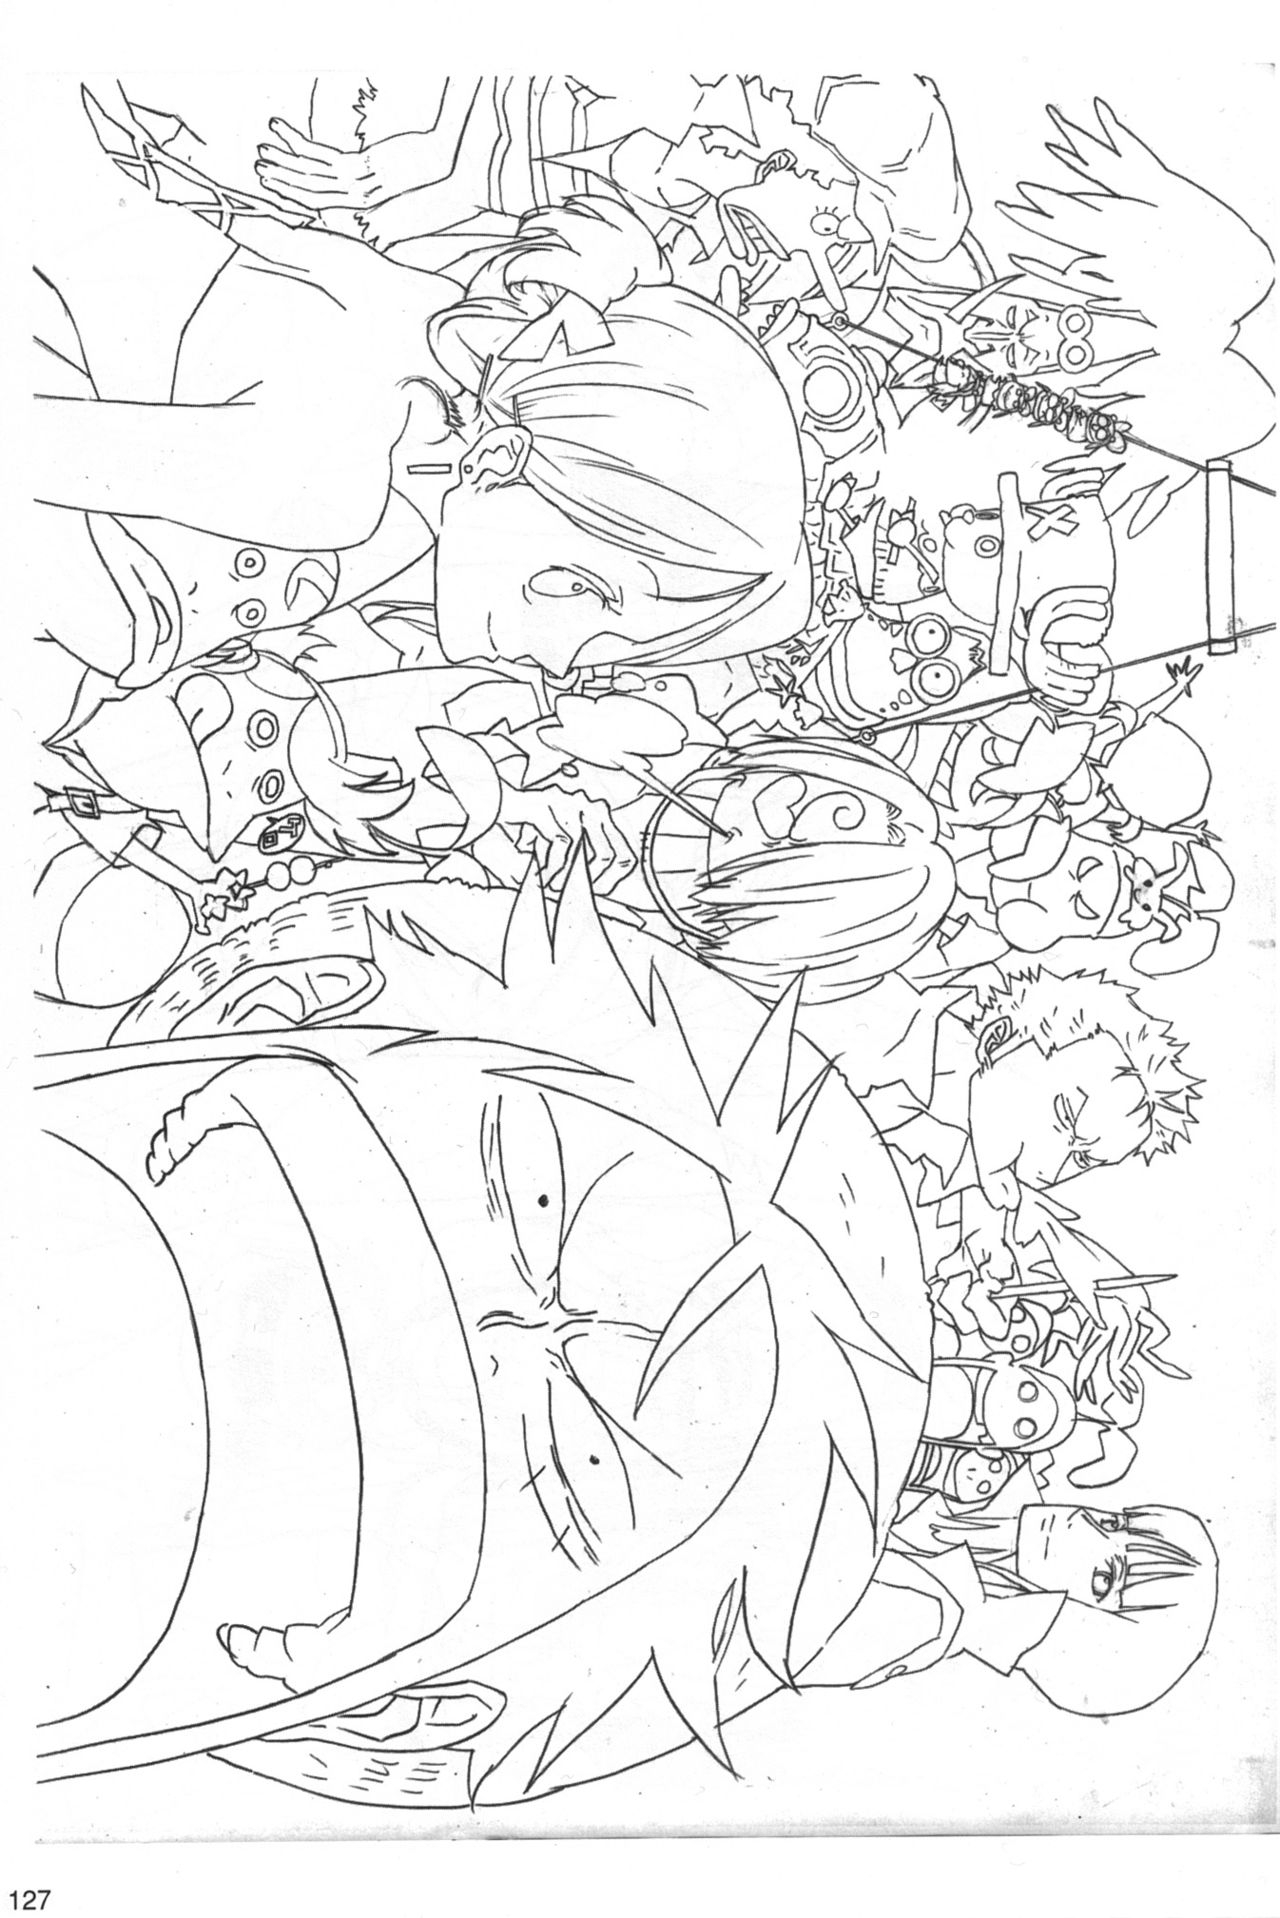 [Artbook] Sushio One Piece Movie 06 - Pencil Test and Design Book 125